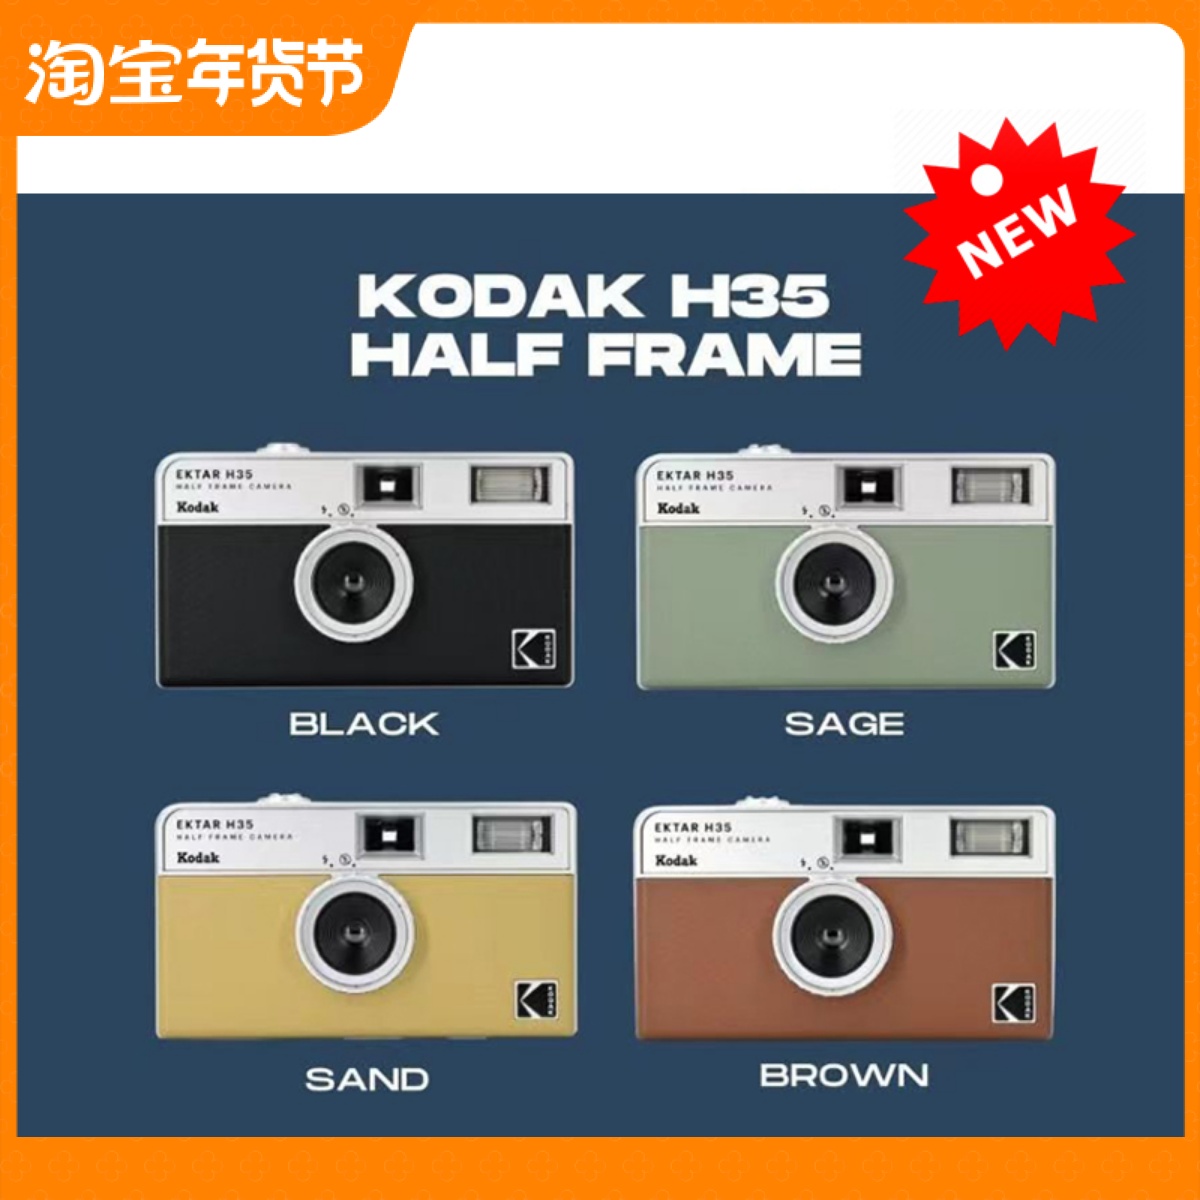 New product USA Kodak H35 camera 135 half lattice picable with 72 manual flashing lights spot-Taobao